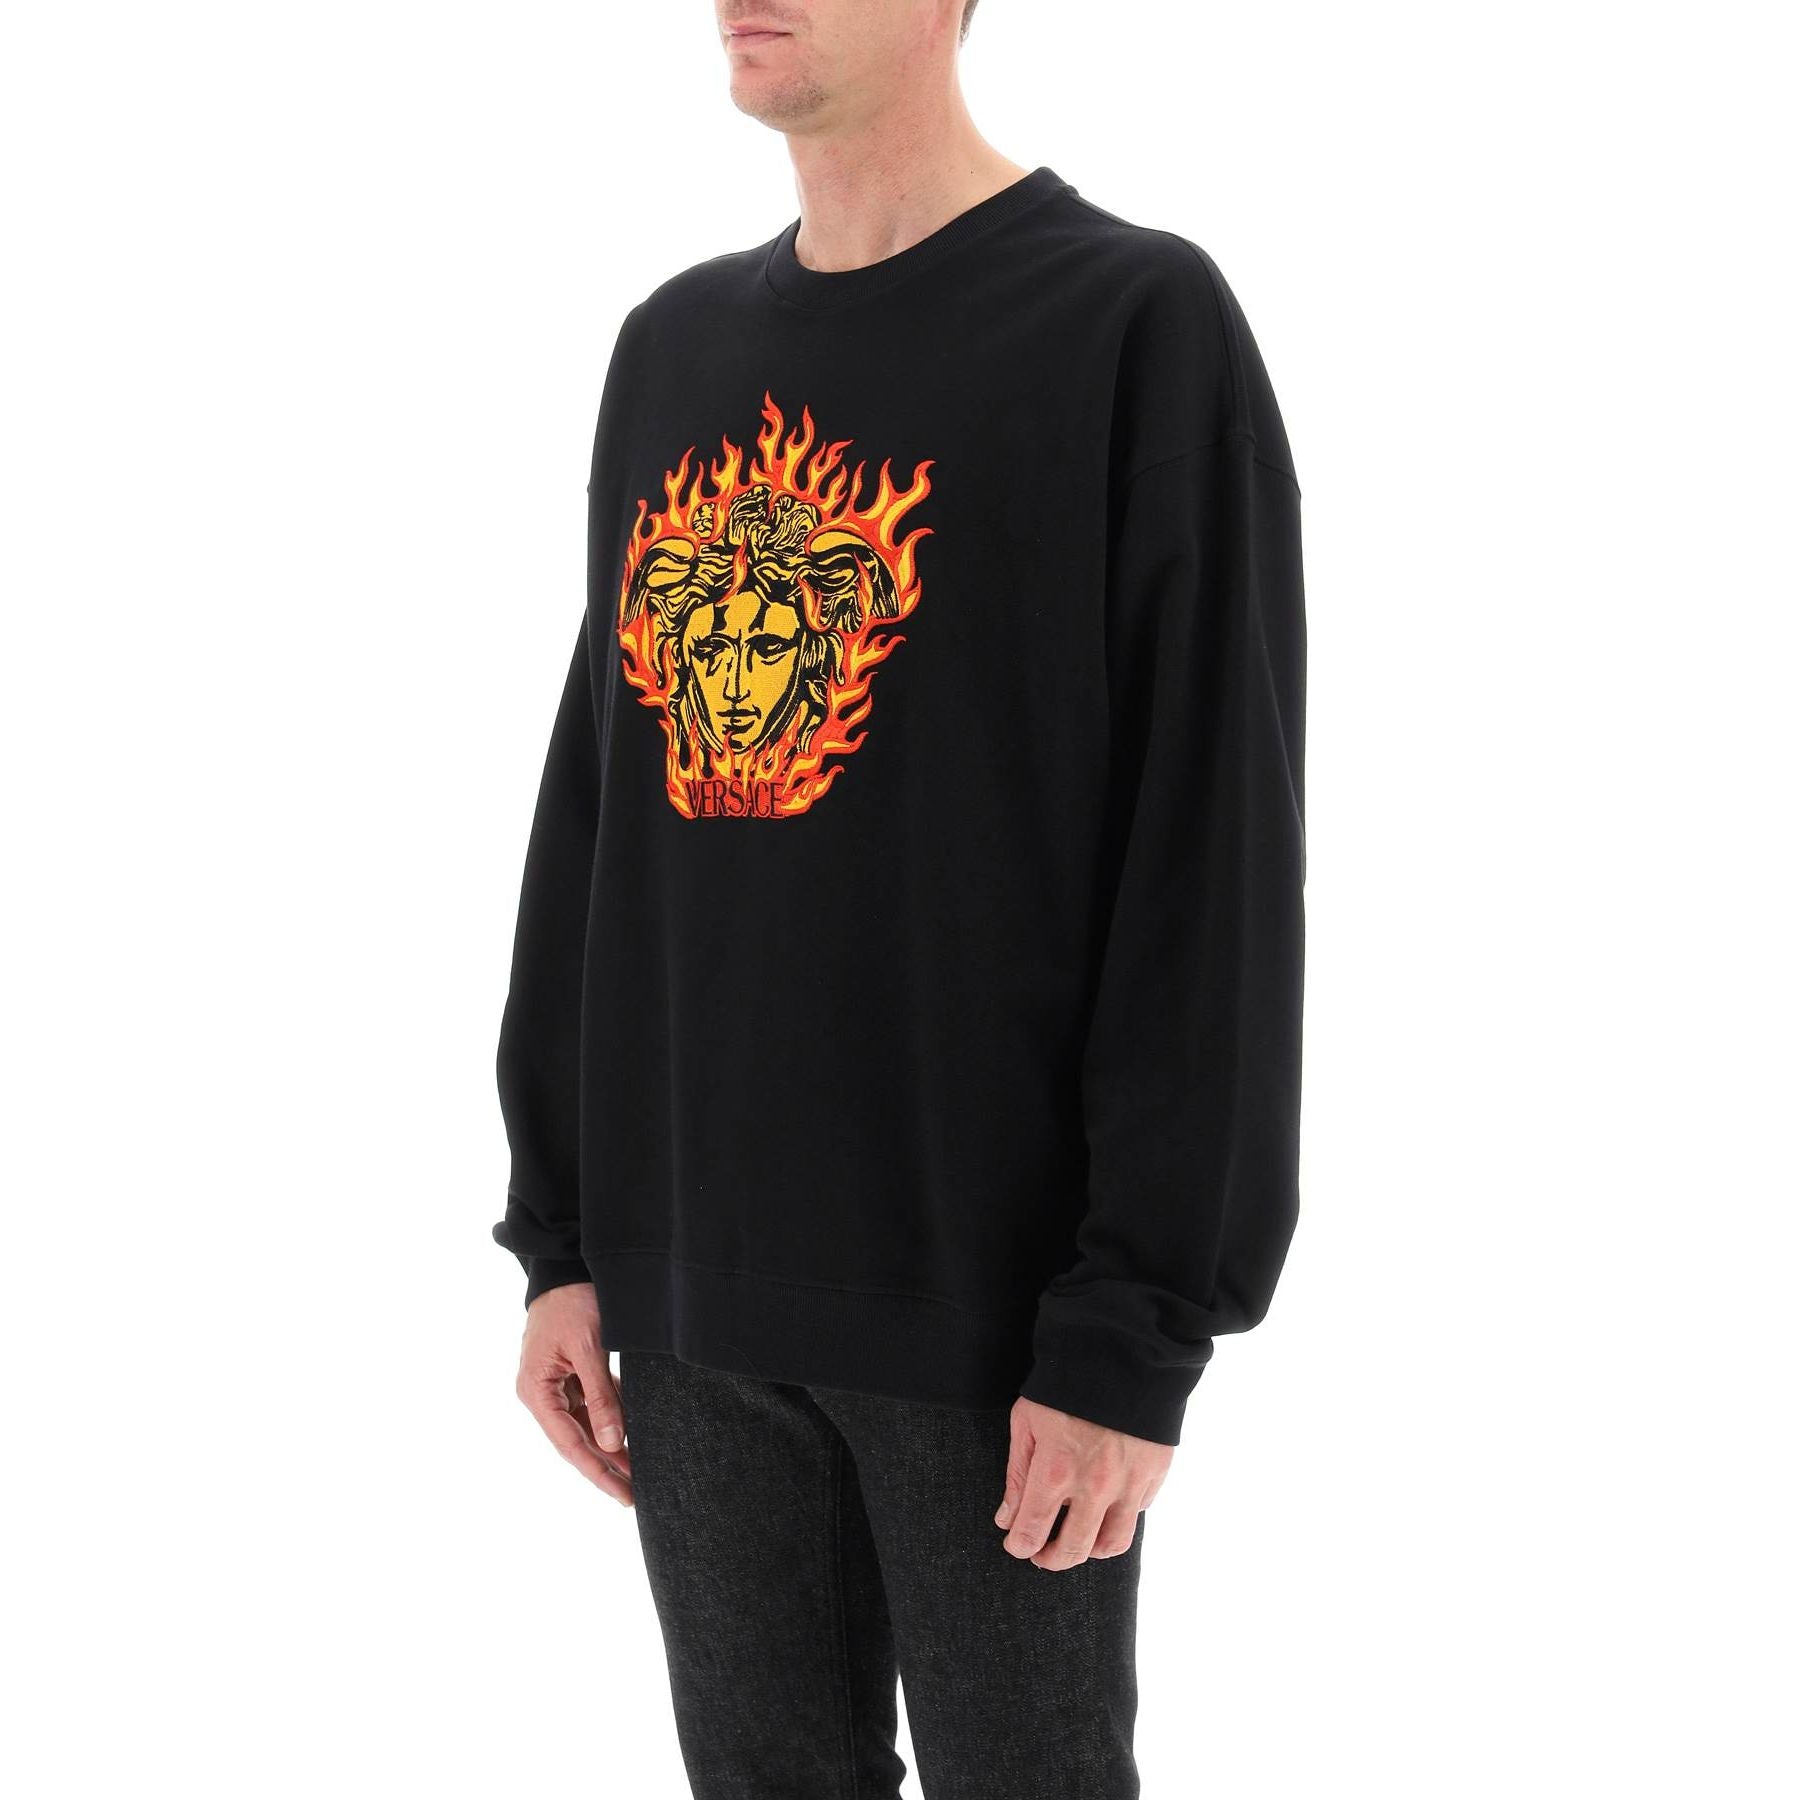 Medusa Flame Sweatshirt